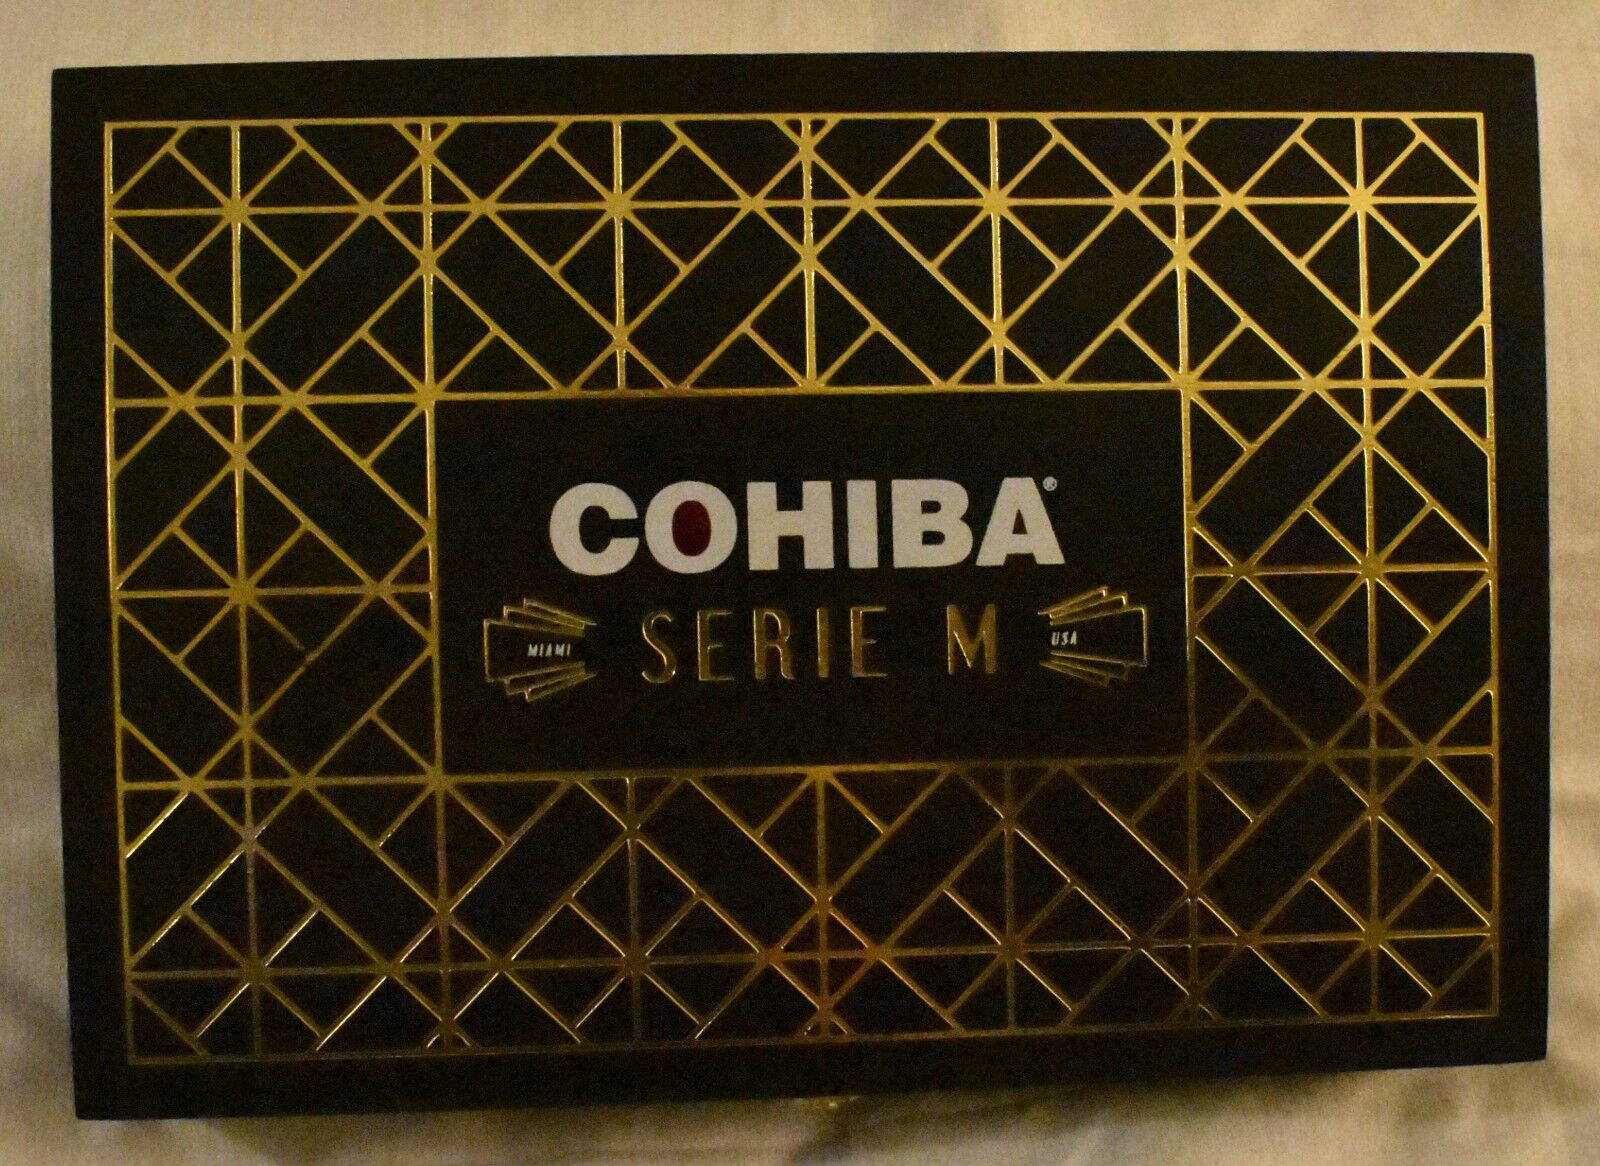 COHIBA SERIE M - 12.25 x 8.75 x 2 - EMPTY CIGAR BOX - MINT CONDITION 